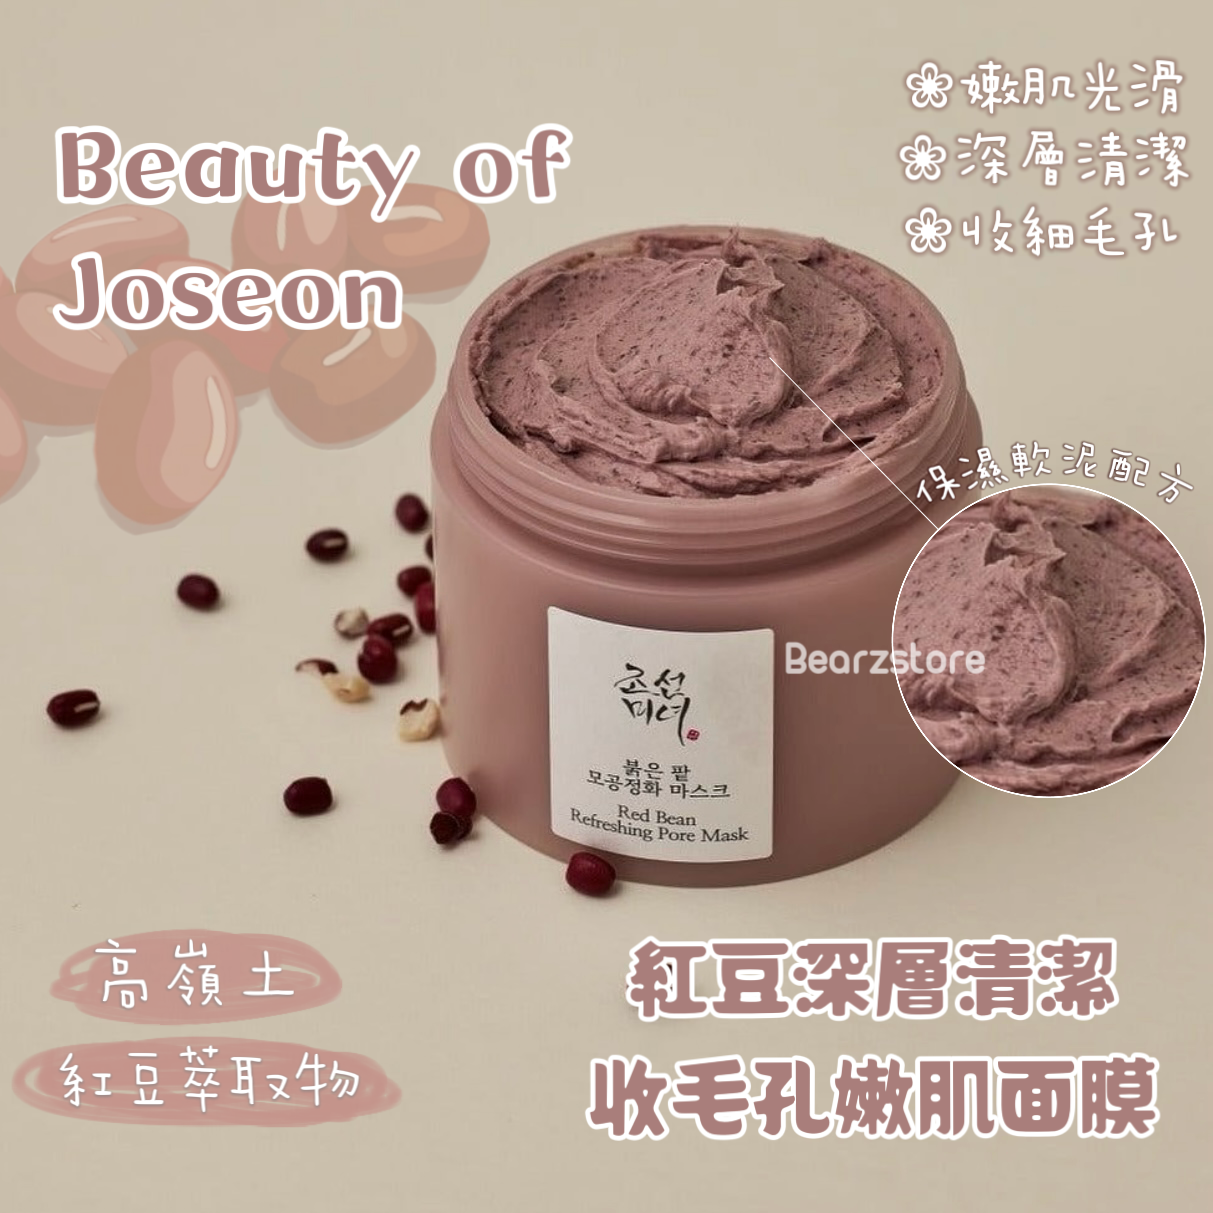 Beauty of Joseon 紅豆深層清潔收毛孔嫩肌面膜 🫘| Beauty of Joseon Red Bean Refreshing Pore Mask